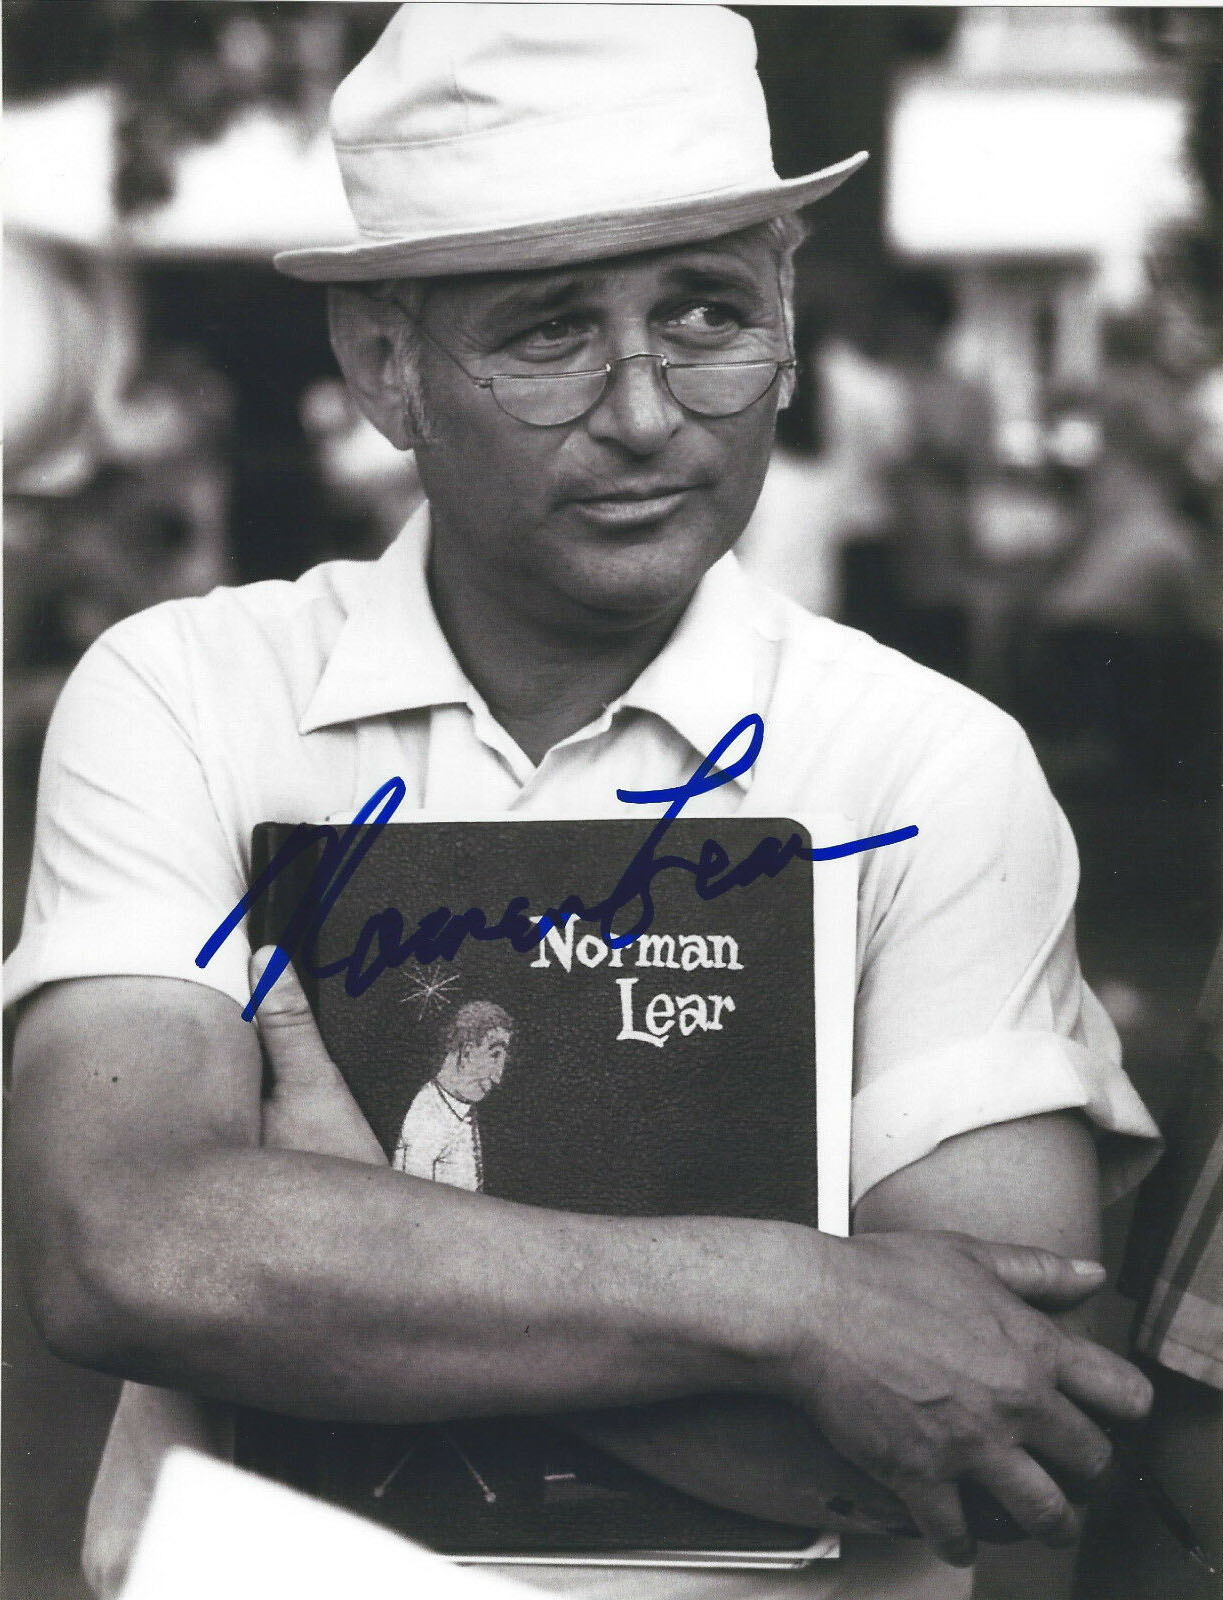 Norman Lear